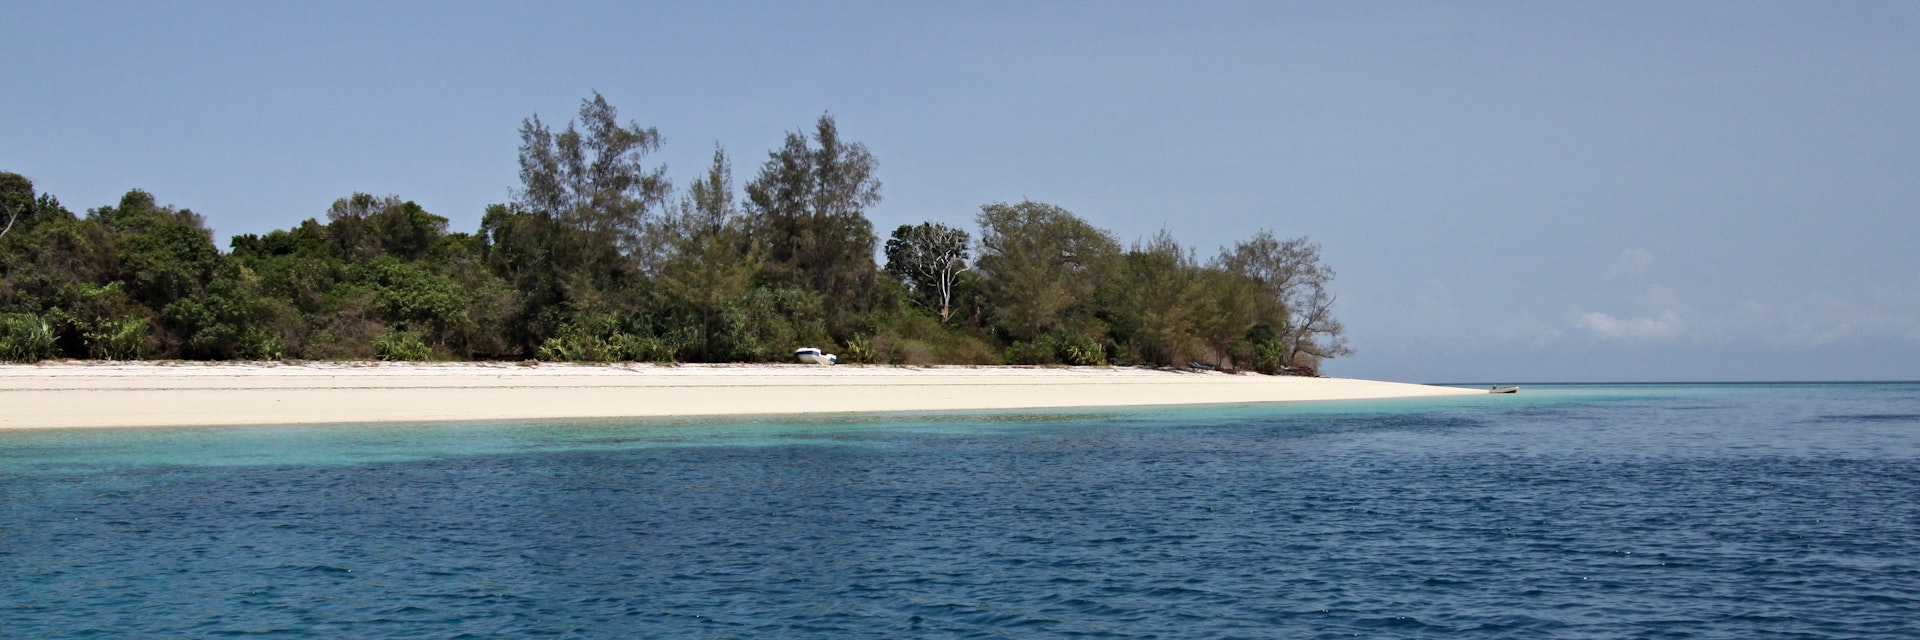 Misali Island, Tanzania.